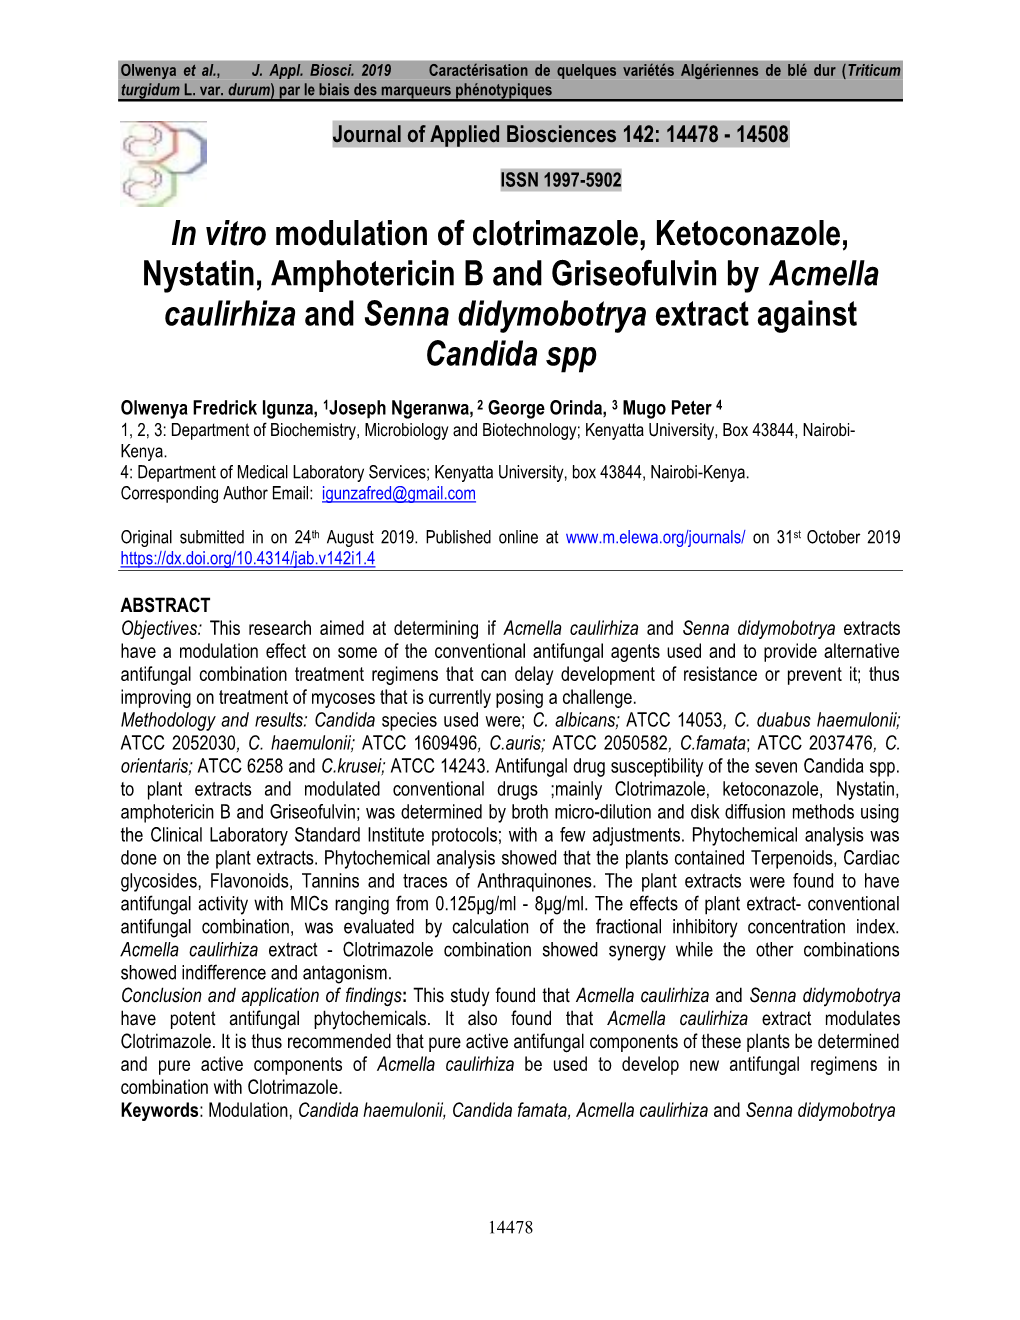 In Vitro Modulation of Clotrimazole, Ketoconazole, Nystatin, Amphotericin B and Griseofulvin by Acmella Caulirhiza and Senna Didymobotrya Extract Against Candida Spp